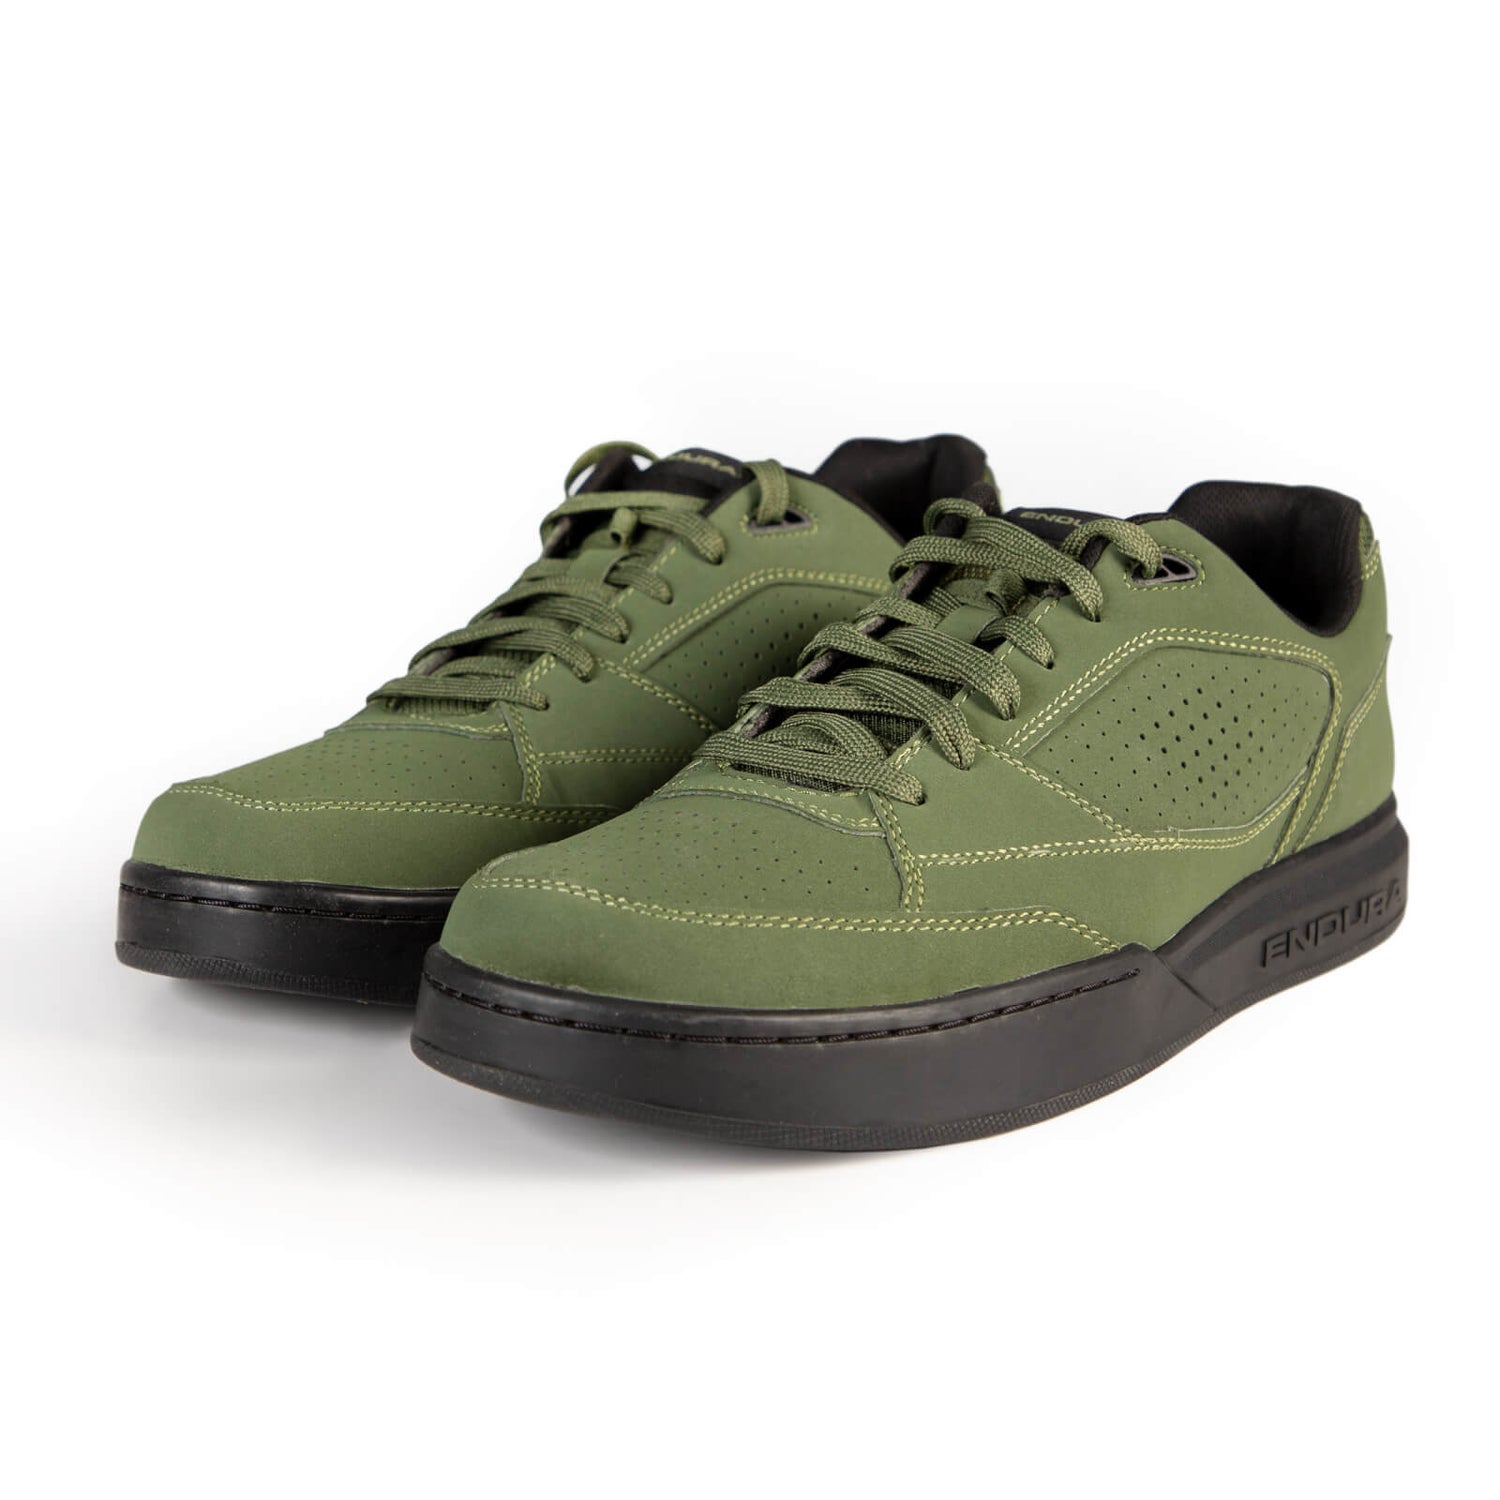 Men's Hummvee Flat Pedal Shoe - Olive Green - EU 47